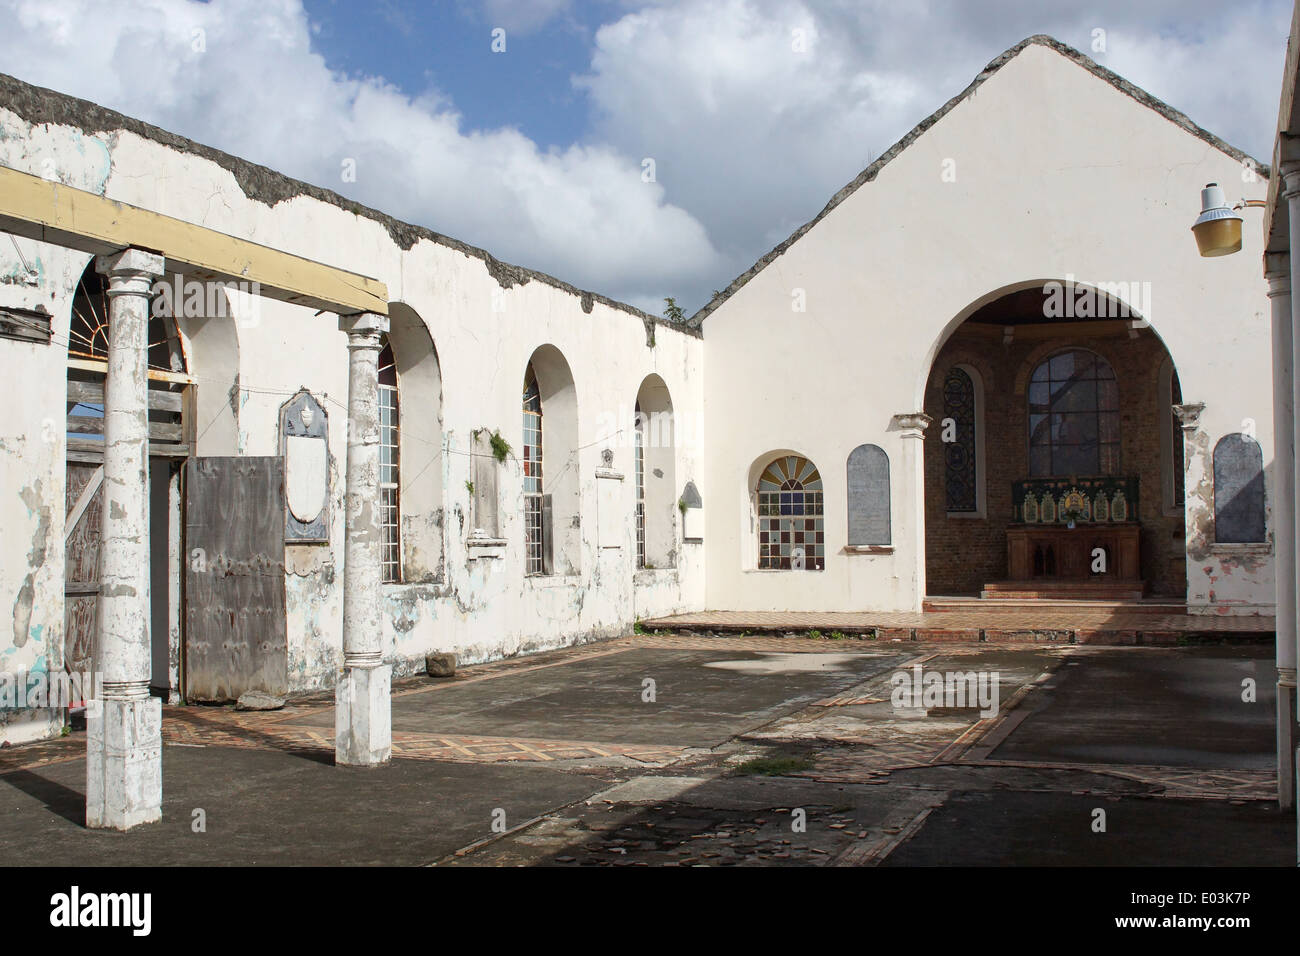 La ruina de la Iglesia Anglicana de Saint Georges. La iglesia fue destruida durante el huracán Iván. Granada, Caribe. Foto de stock